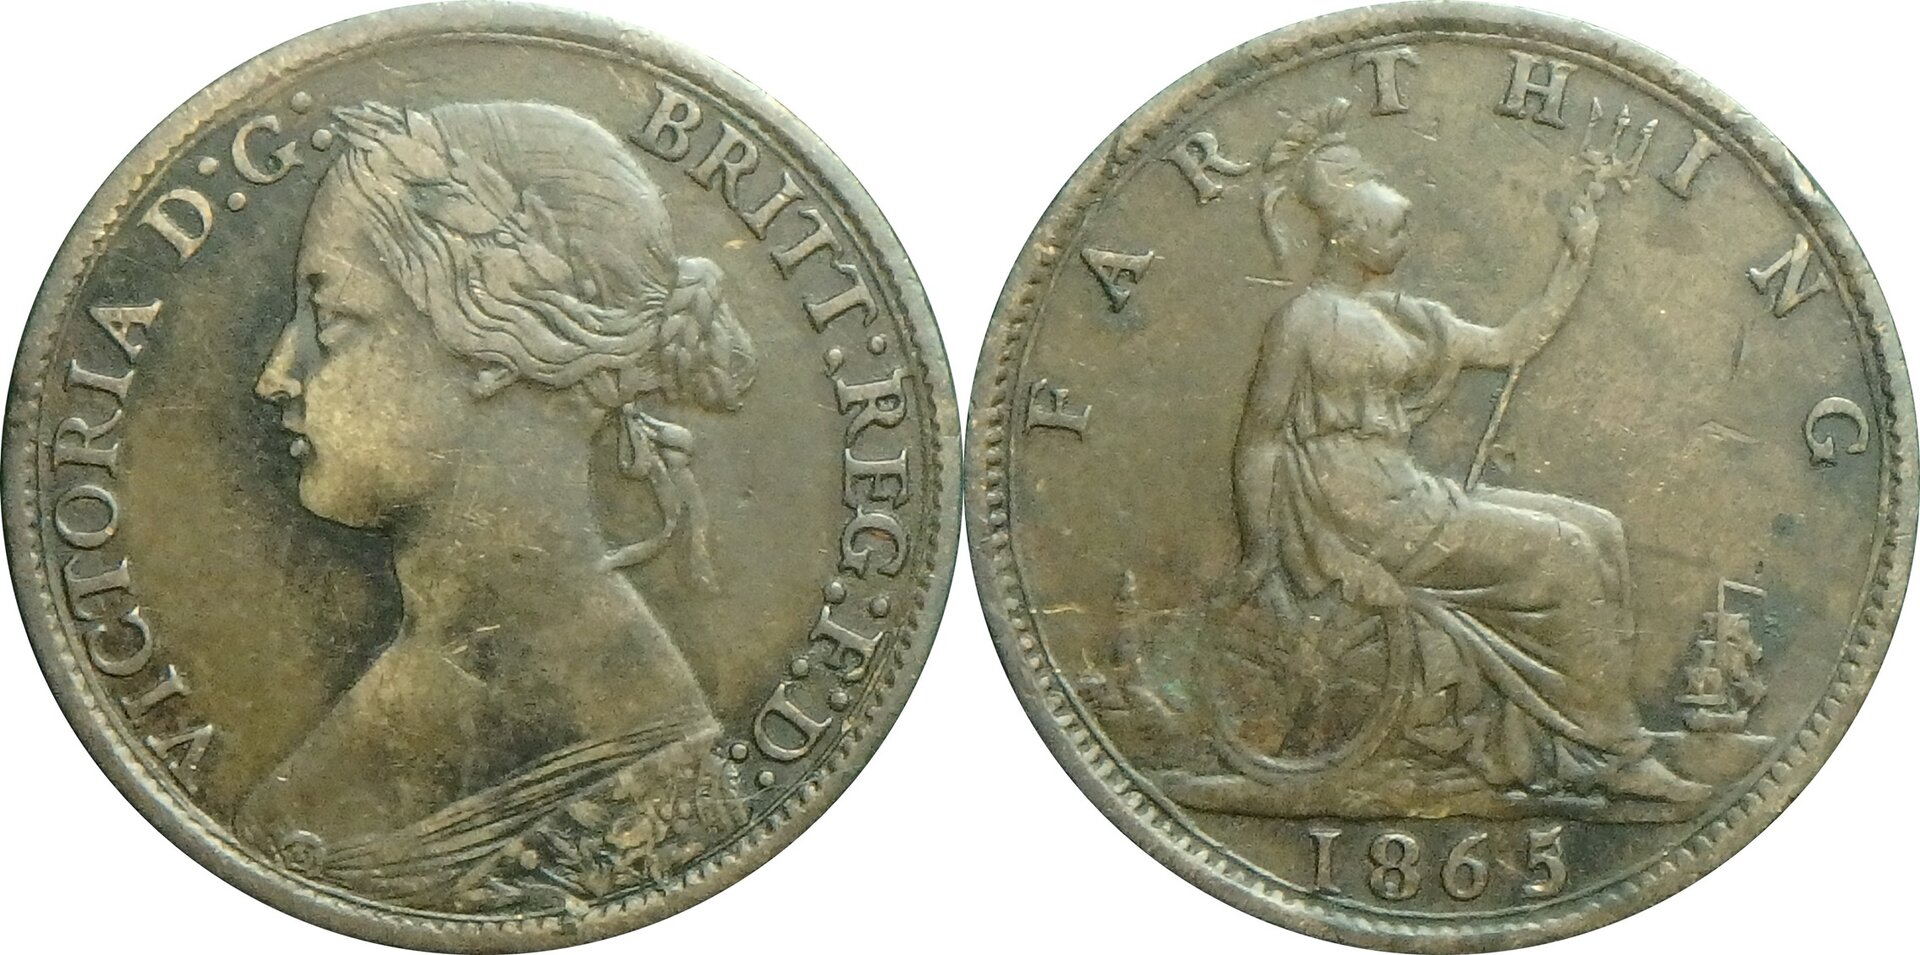 1865 GB farthing.jpg